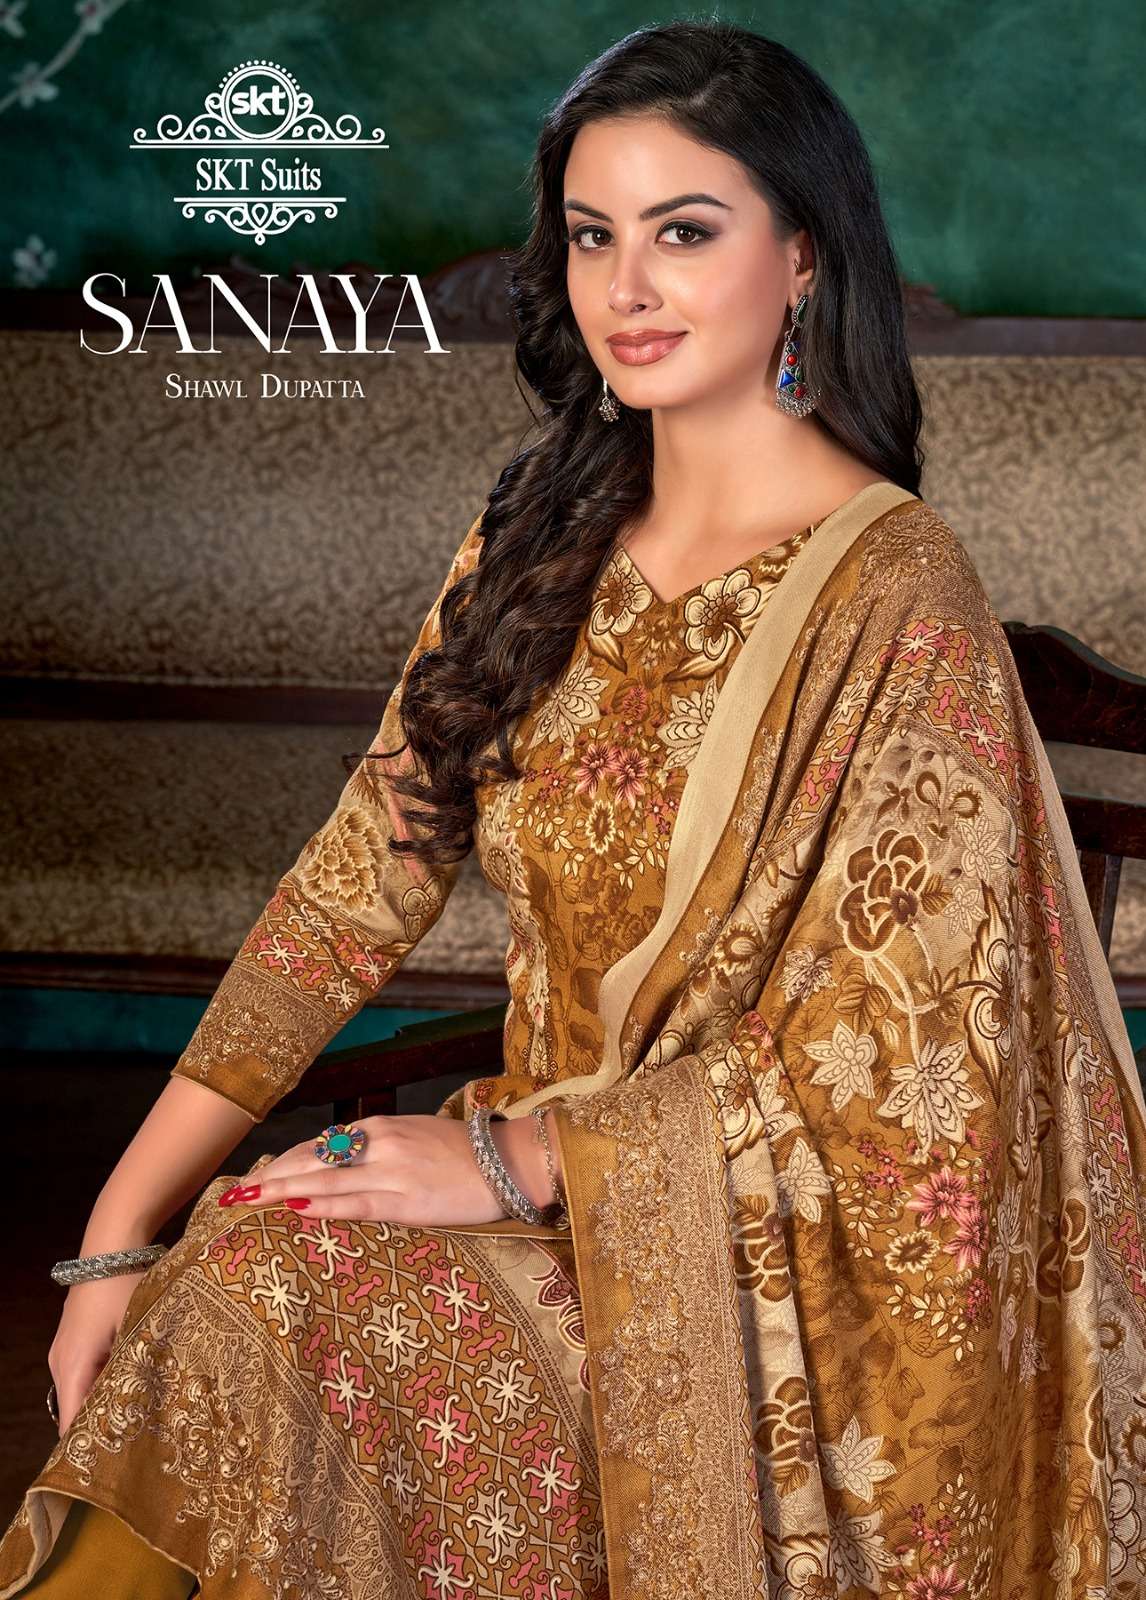 skt suits sanaya 84001-84008 series latest pakistani salwar kameez wholesaler surat gujarat